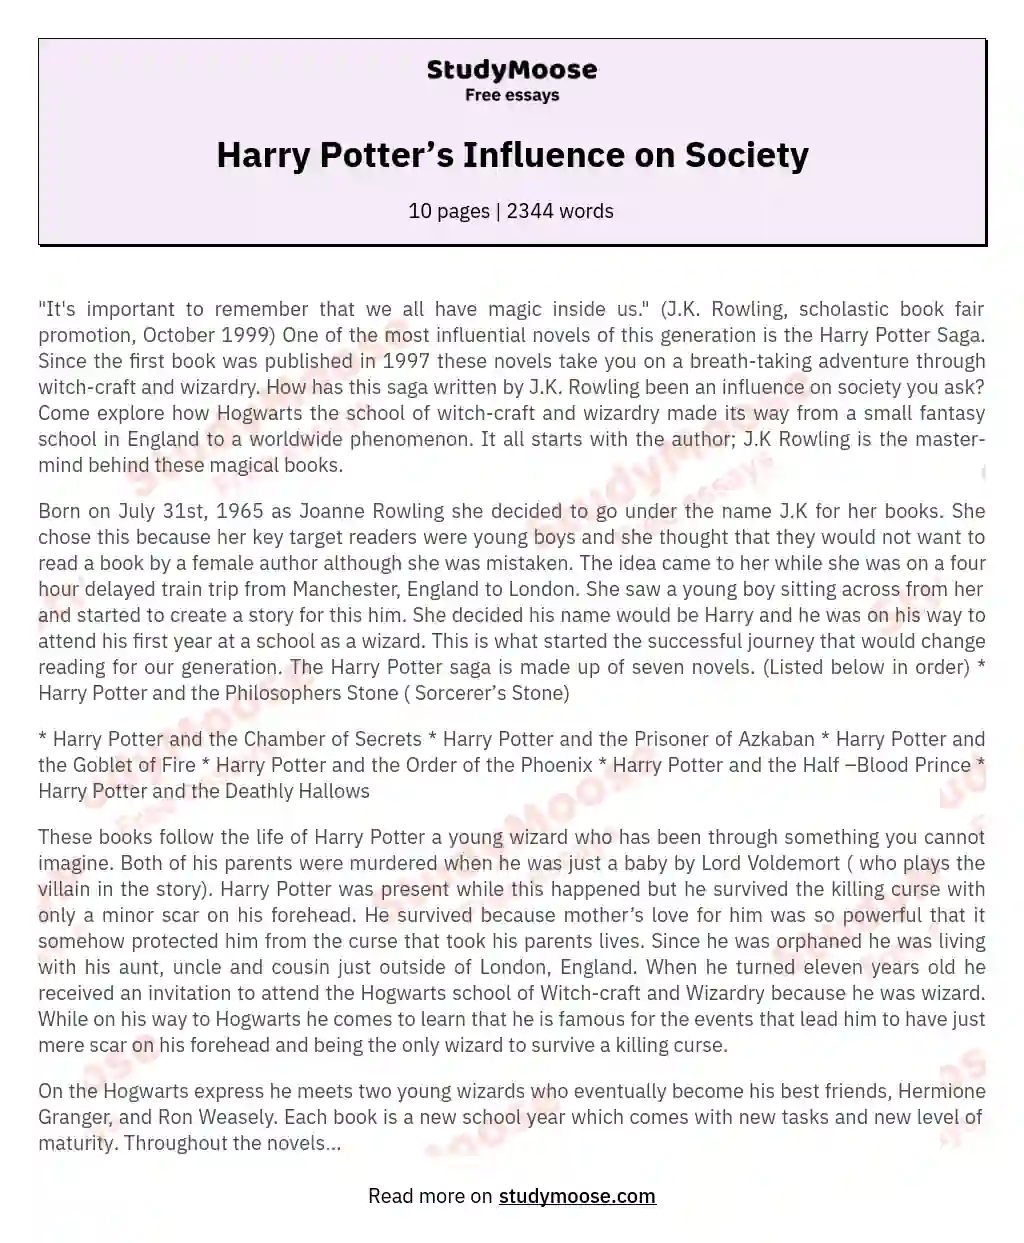 Harry Potter’s Influence on Society